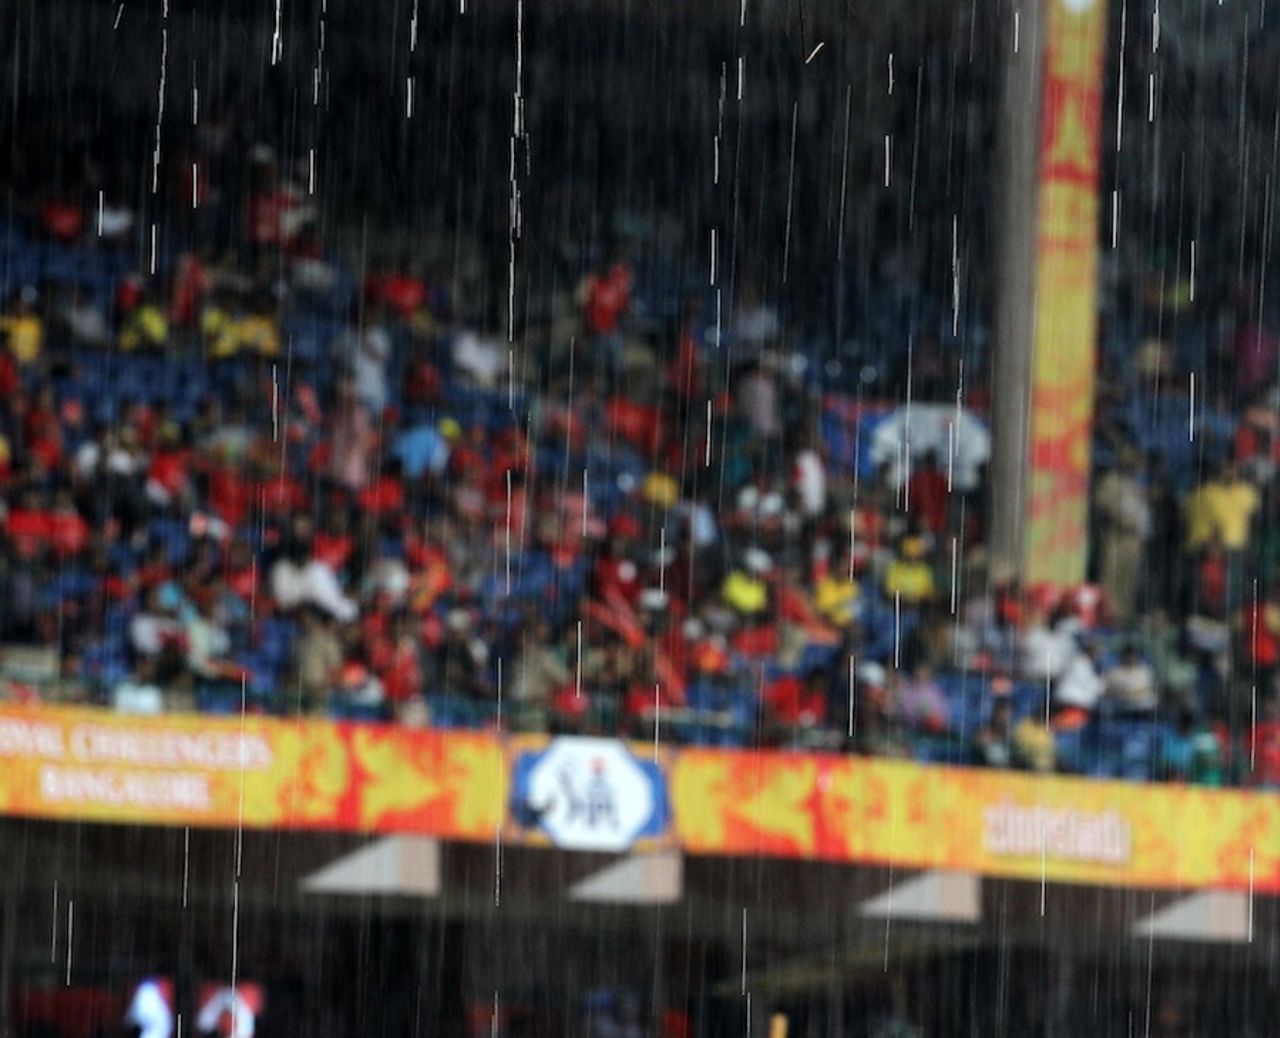 Heavy rains delayed the start of the match, Royal Challengers Bangalore v Chennai Super Kings, IPL2013, Bangalore, May 18, 2013